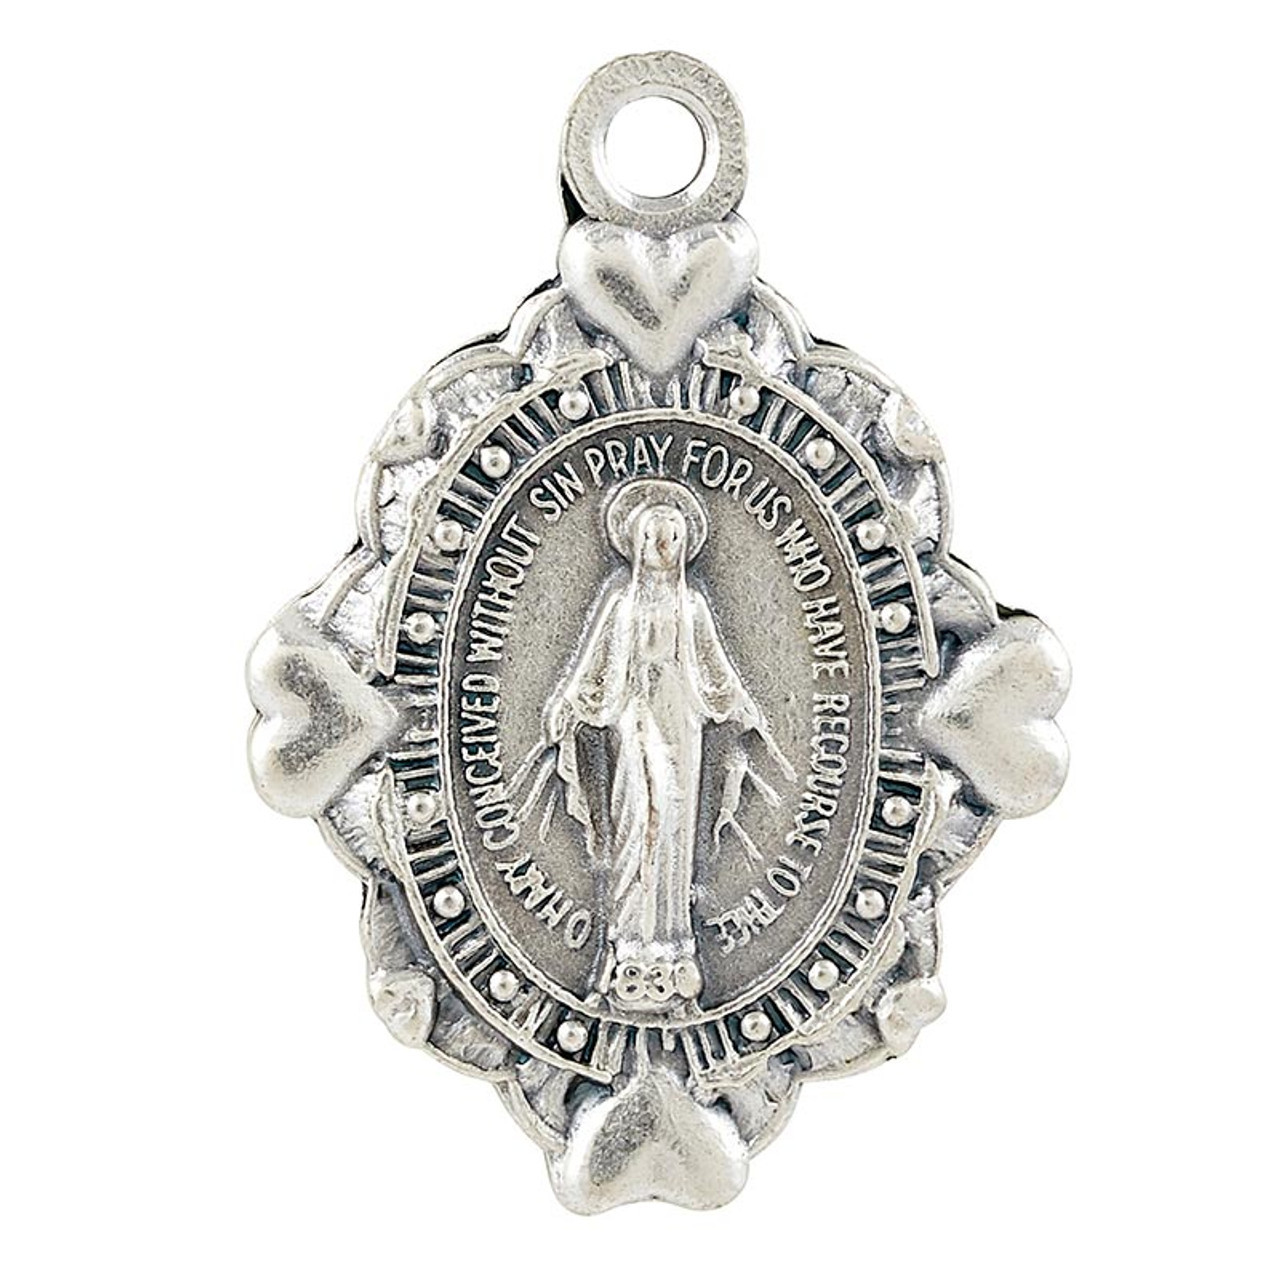 1830 Medal Necklace